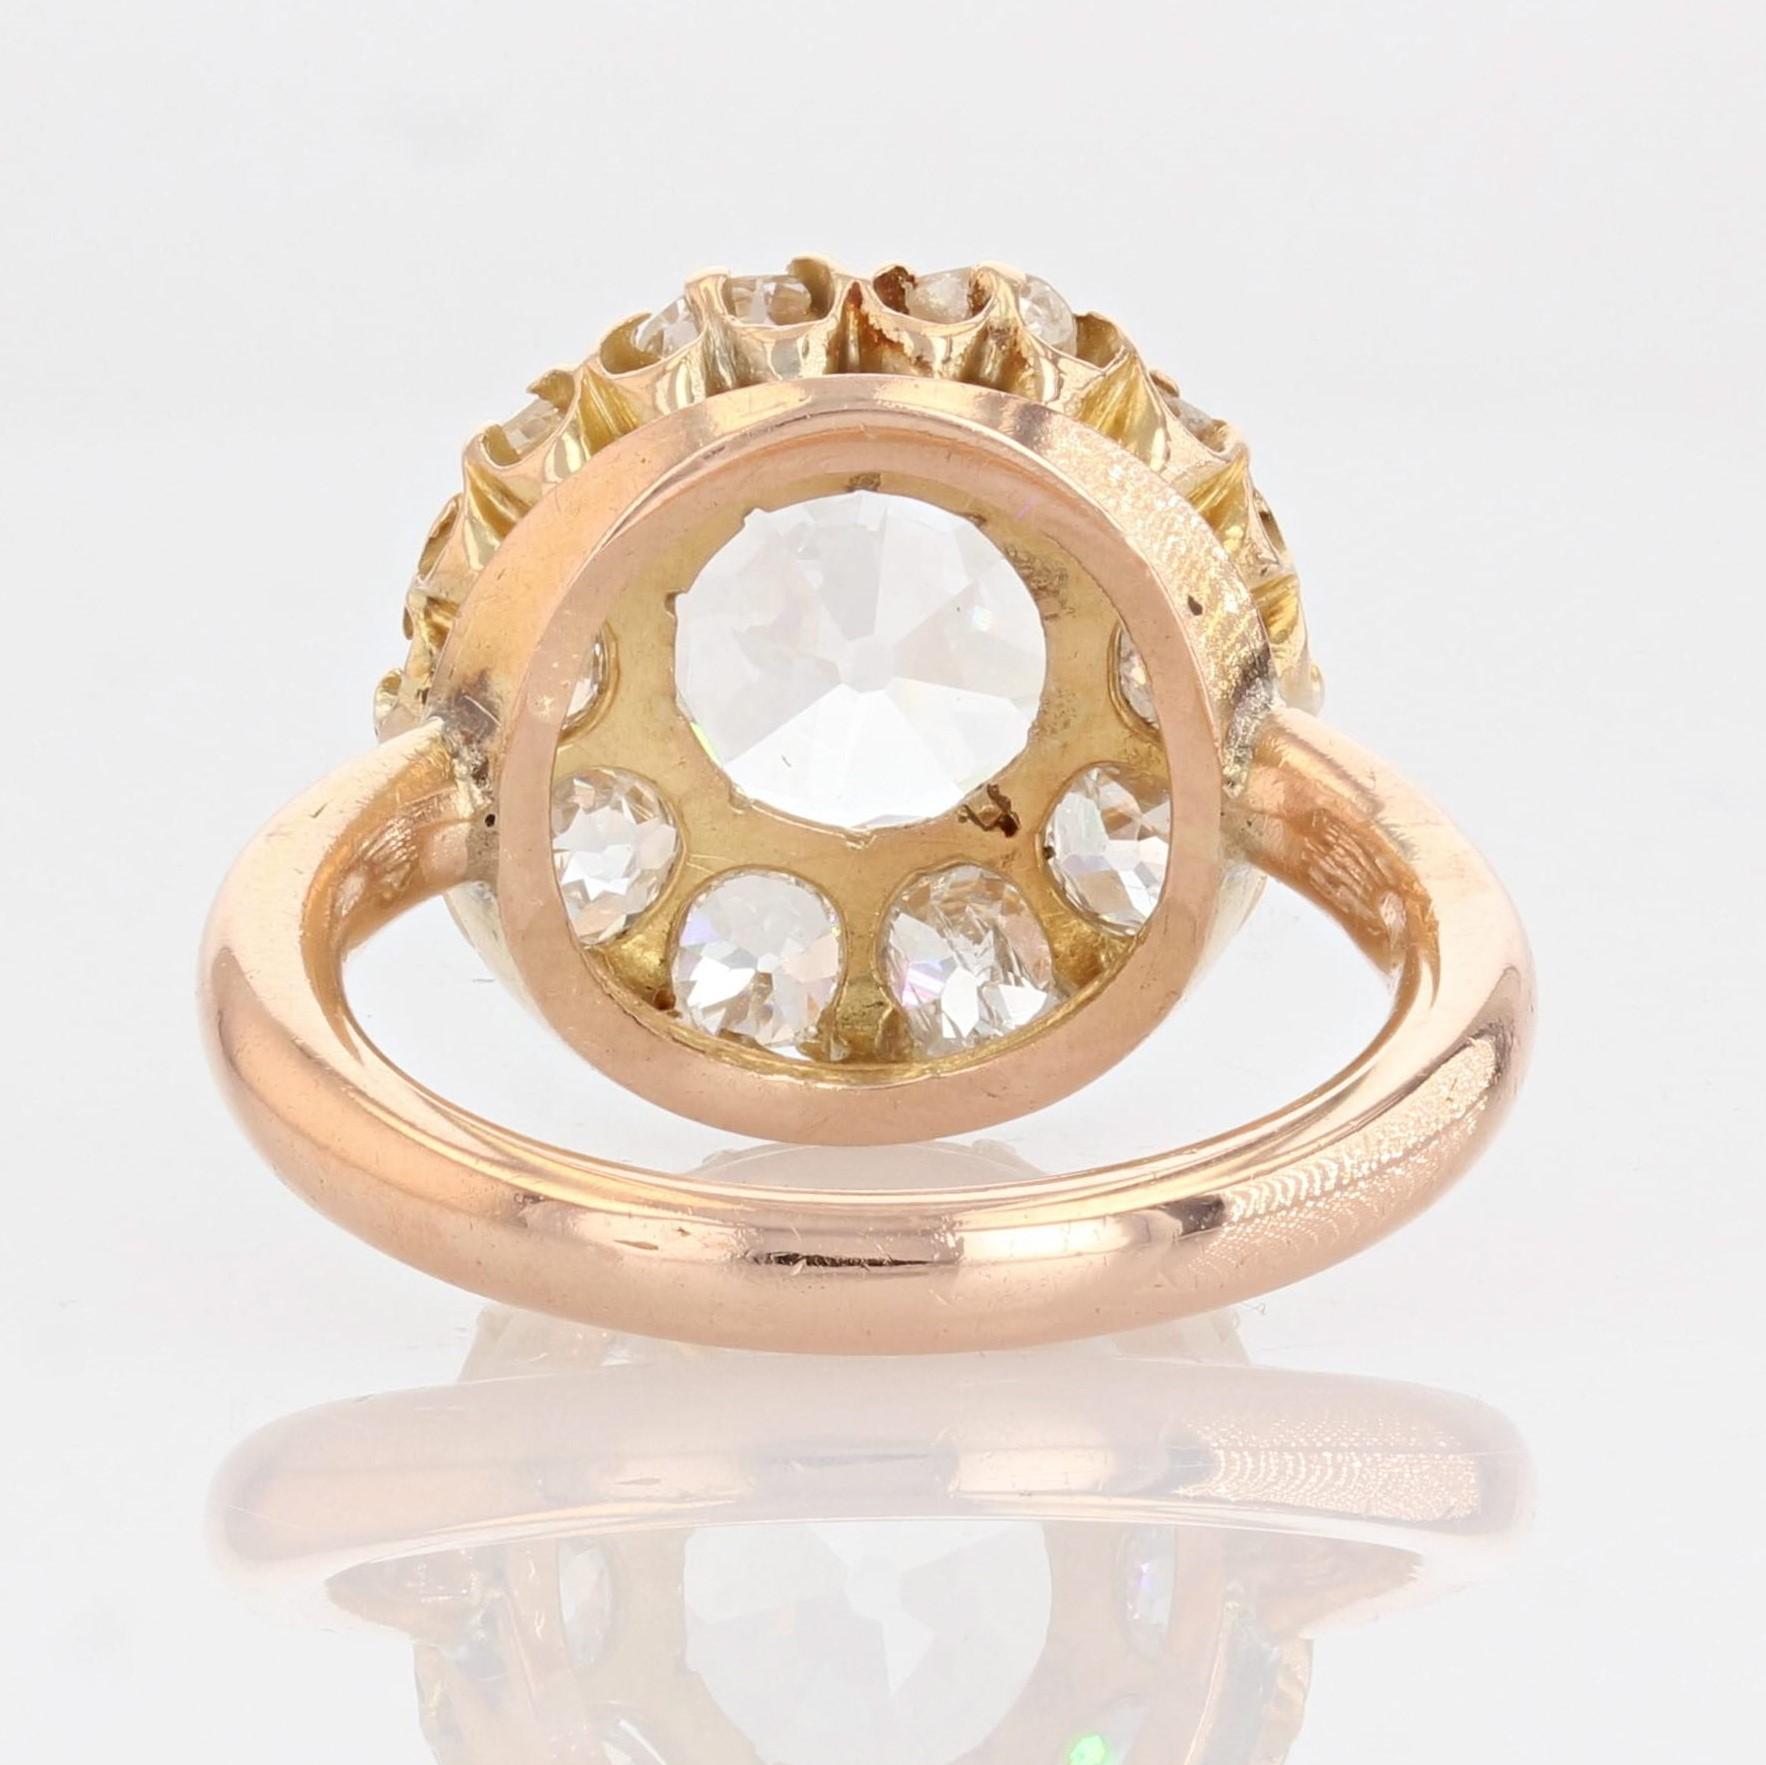 French 19th Century Rose- Cut Diamond 18 Karat Rose Gold Daisy Ring For Sale 1